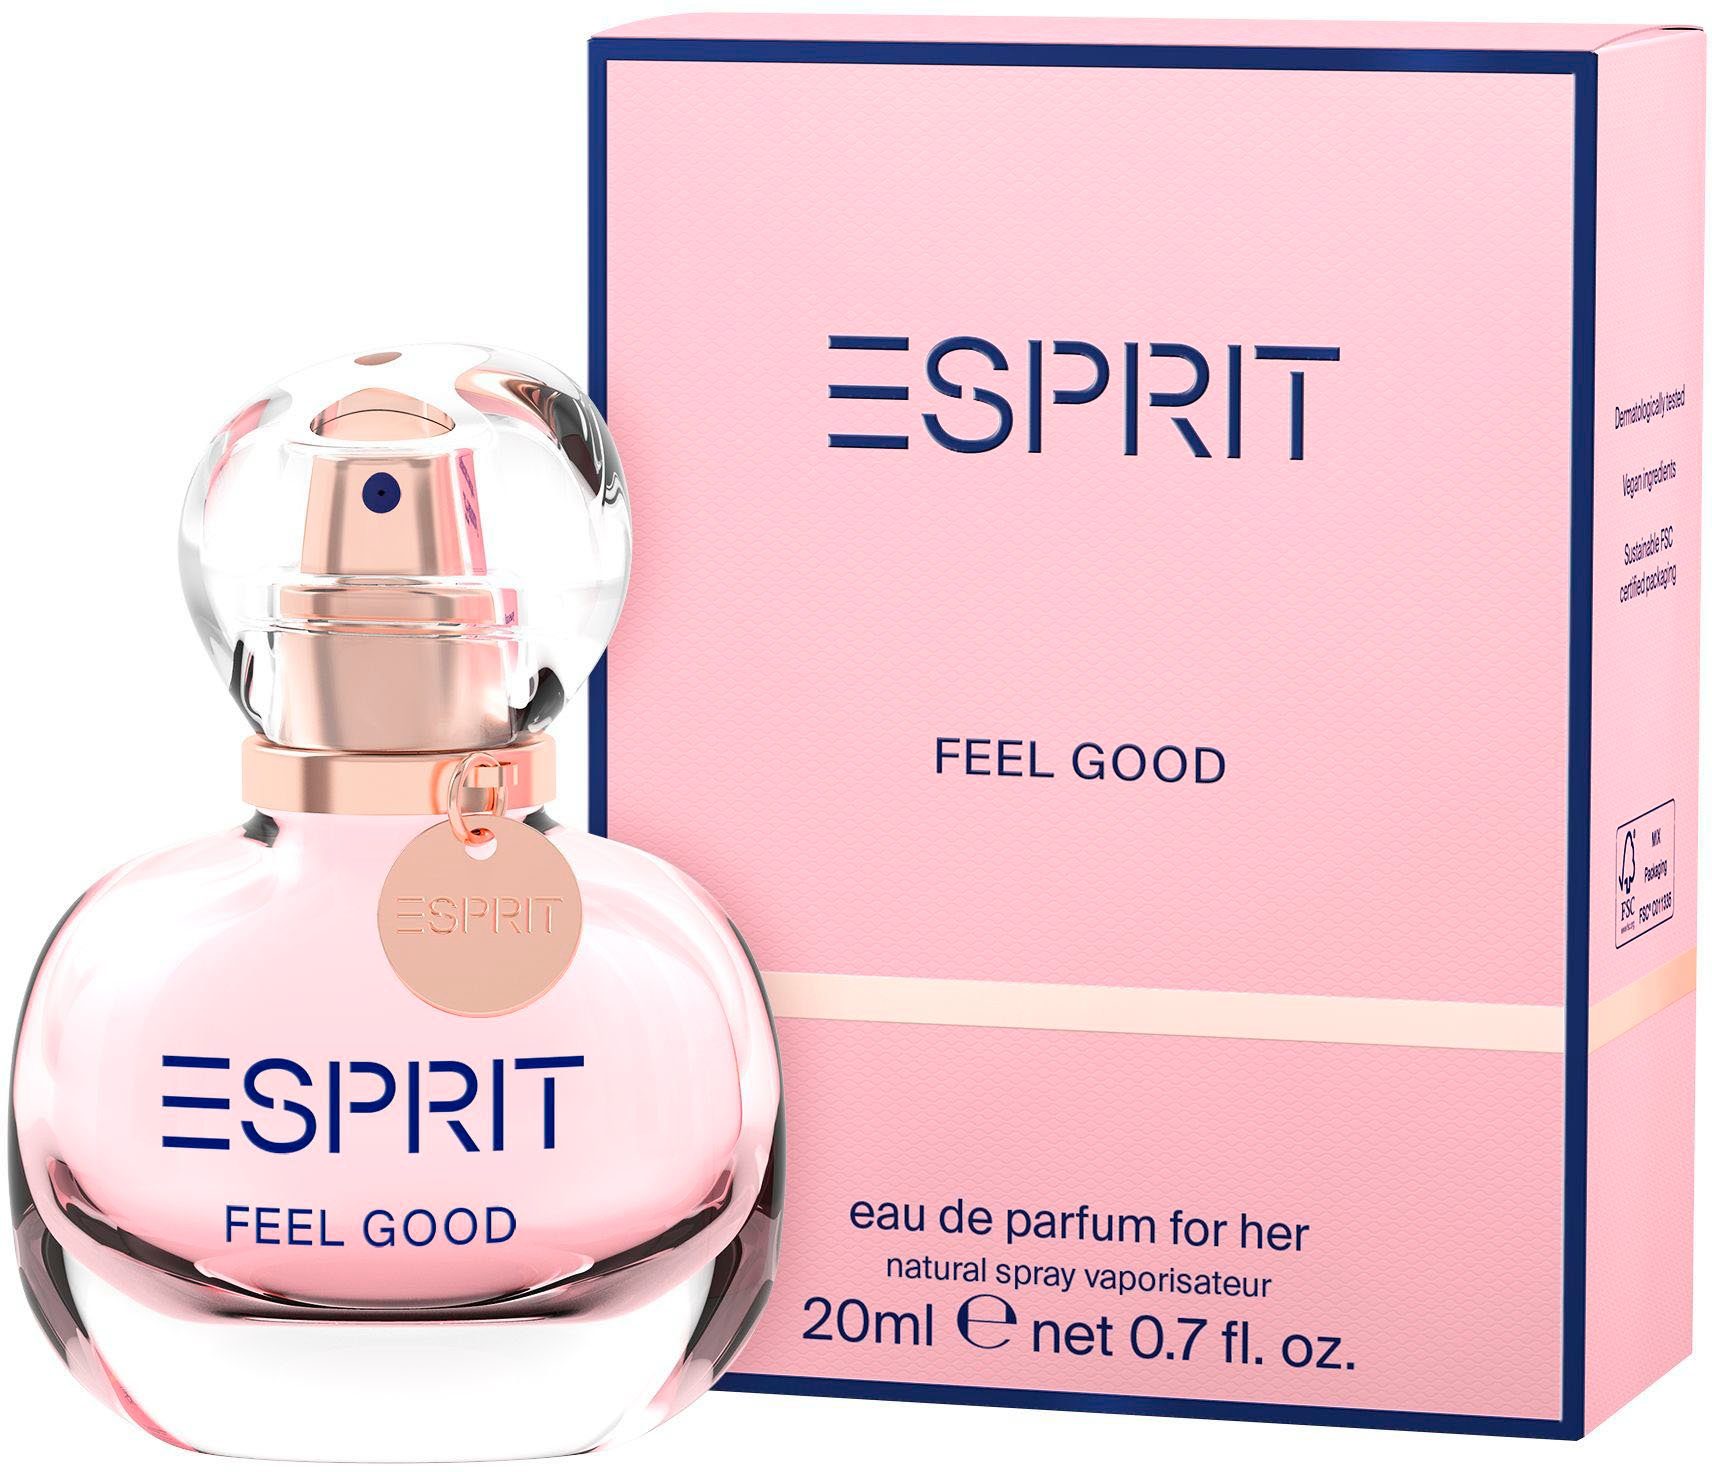 Esprit Eau de Parfum GOOD FEEL her 20 EdP ml for